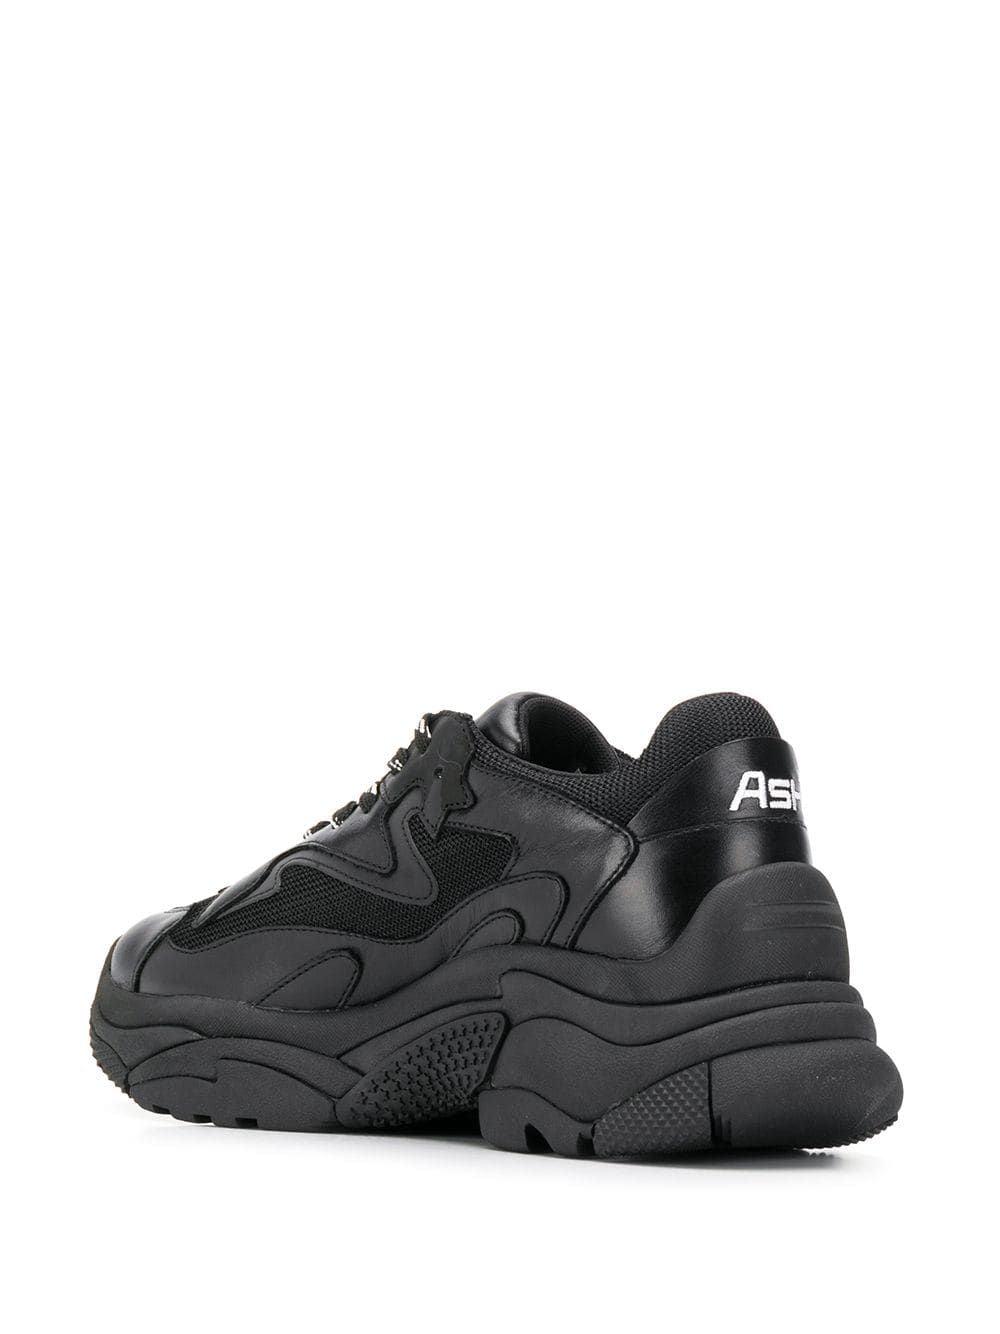 vagabond vinter Agurk Ash Sneakers in Black | Lyst